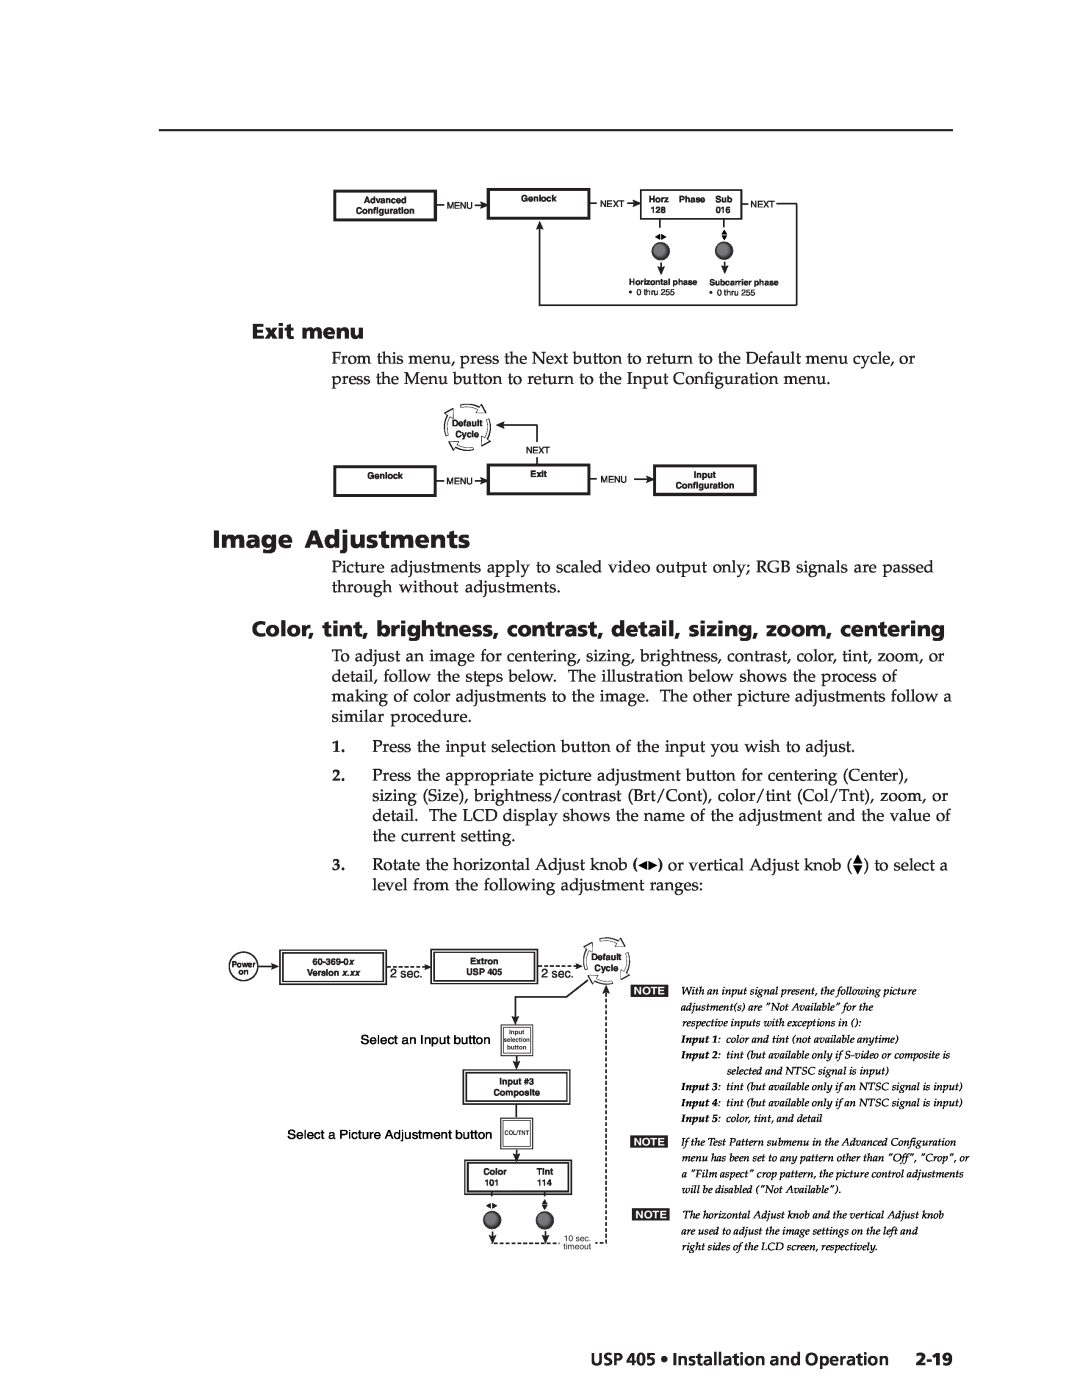 Extron electronic manual Image Adjustments, Exit menu, USP 405 Installation and Operation 